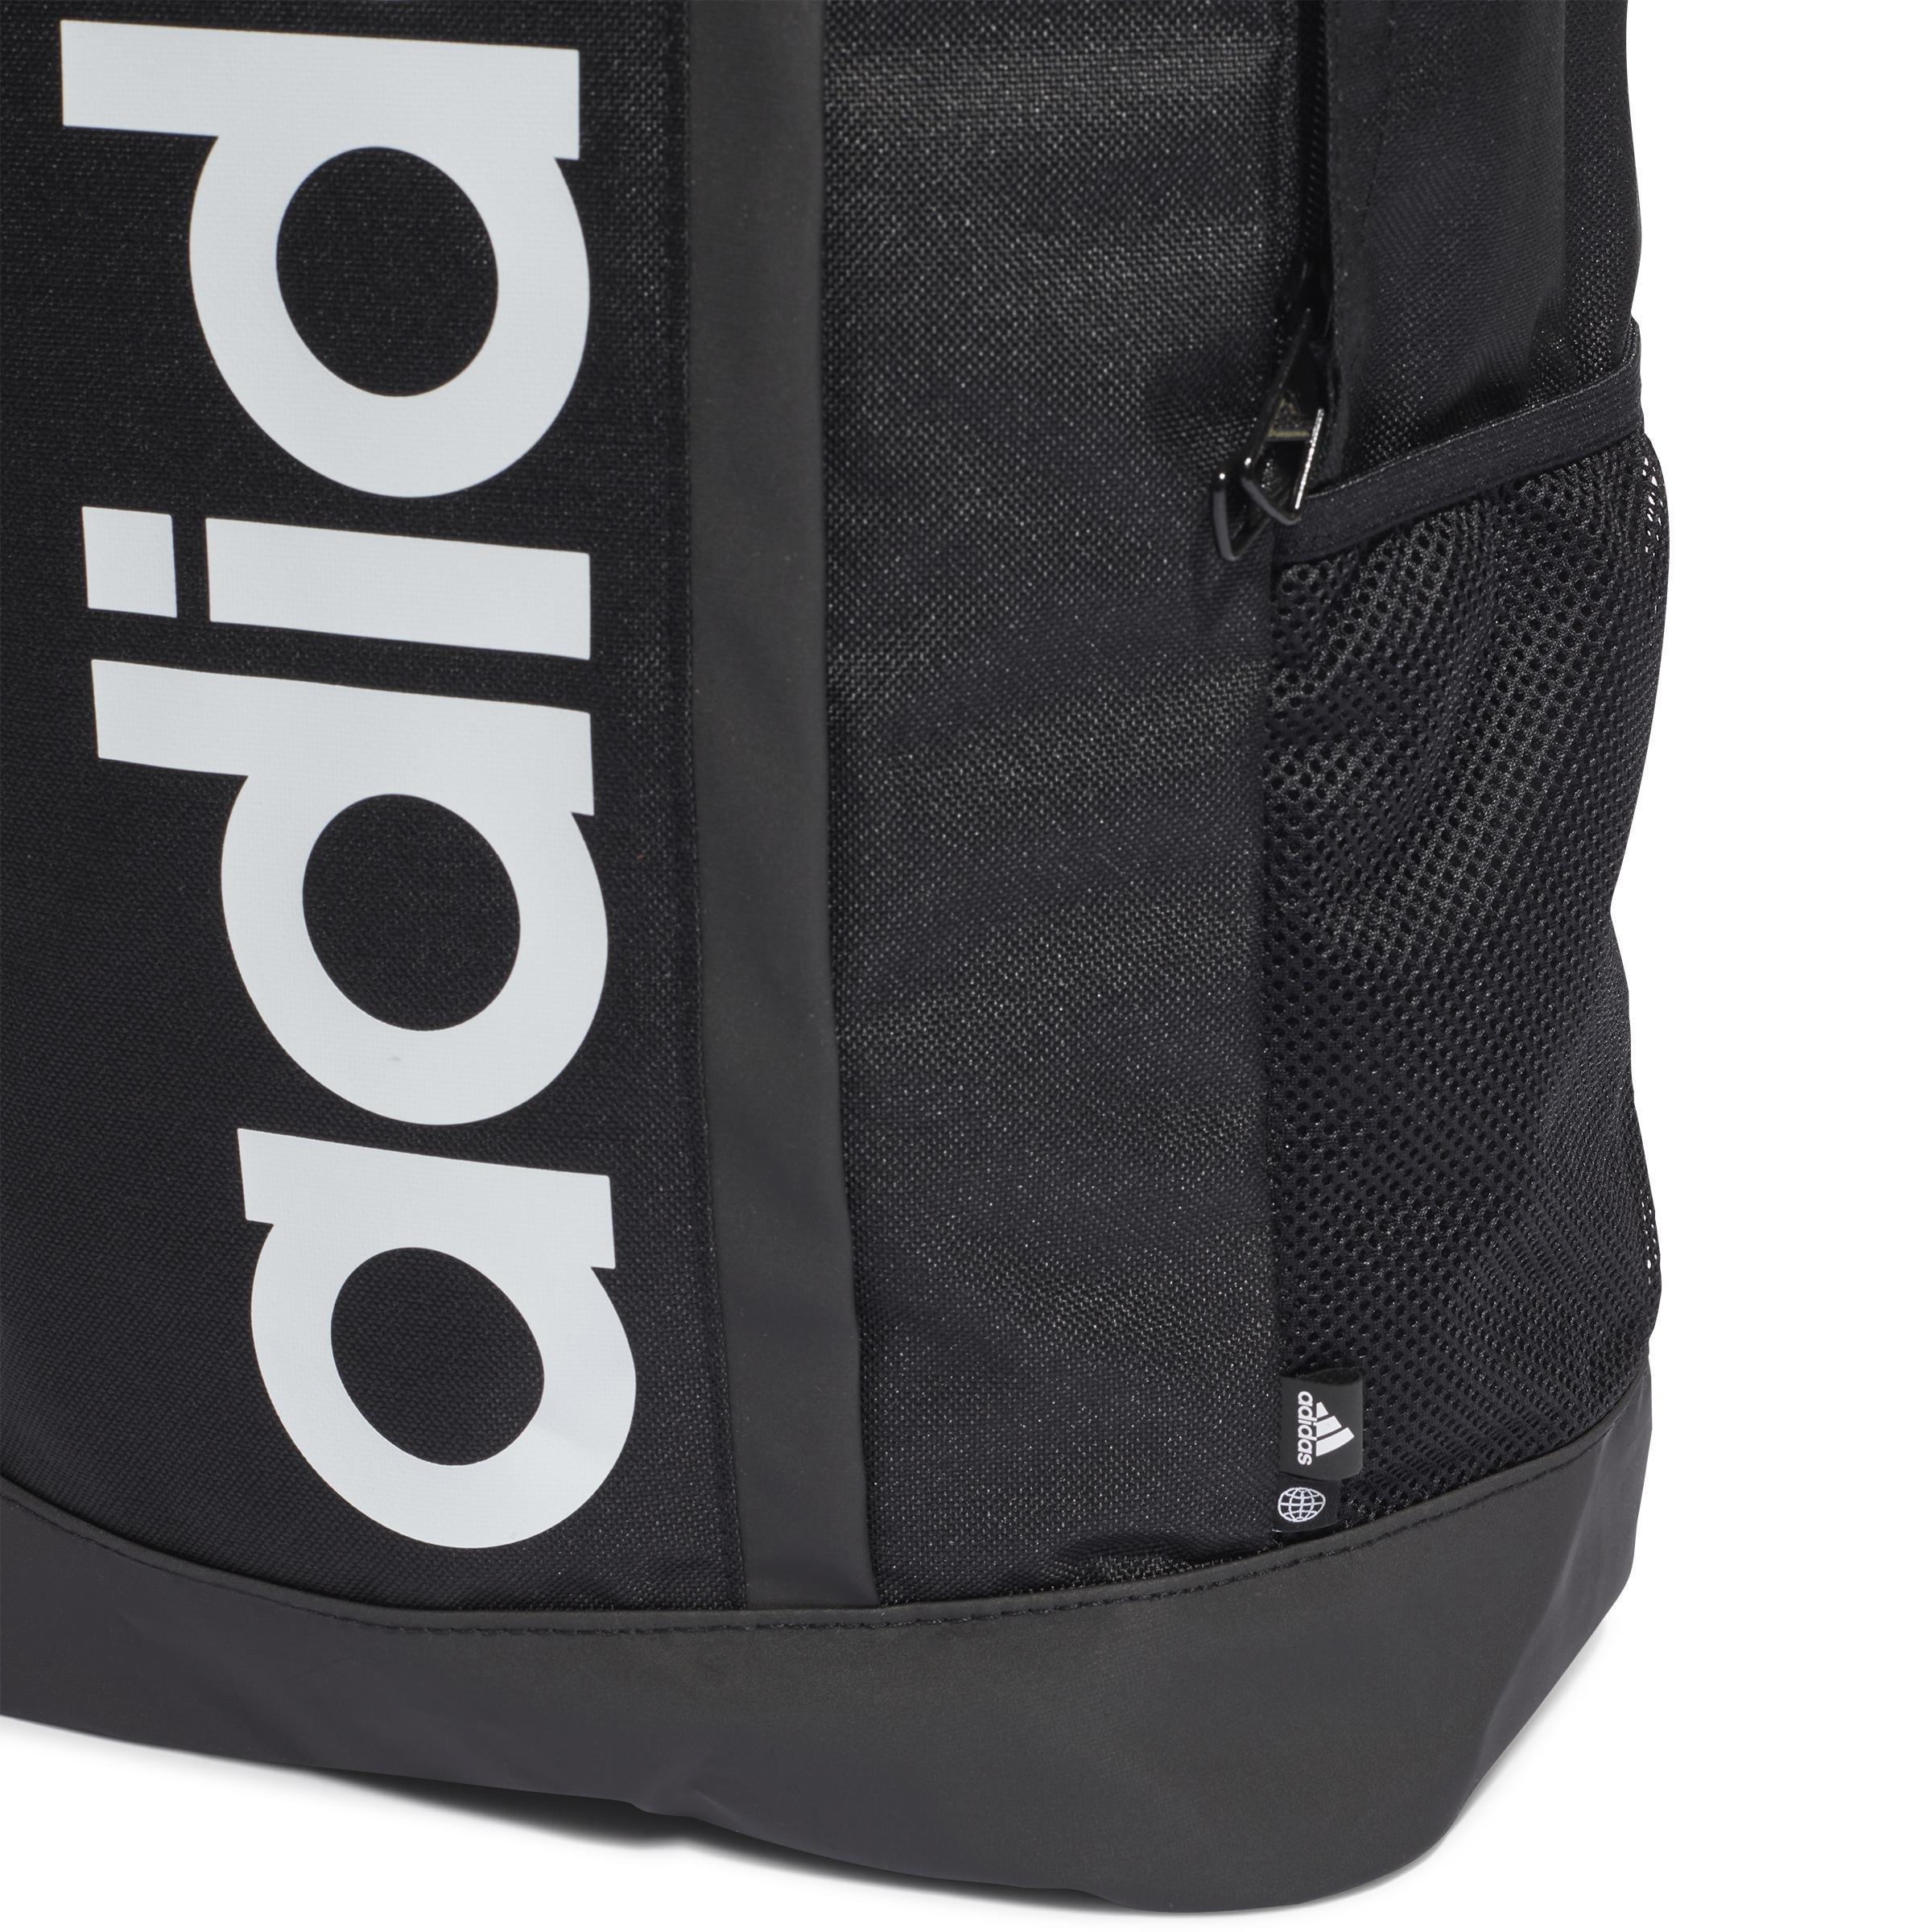 adidas - Unisex Essentials Linear Backpack, Black